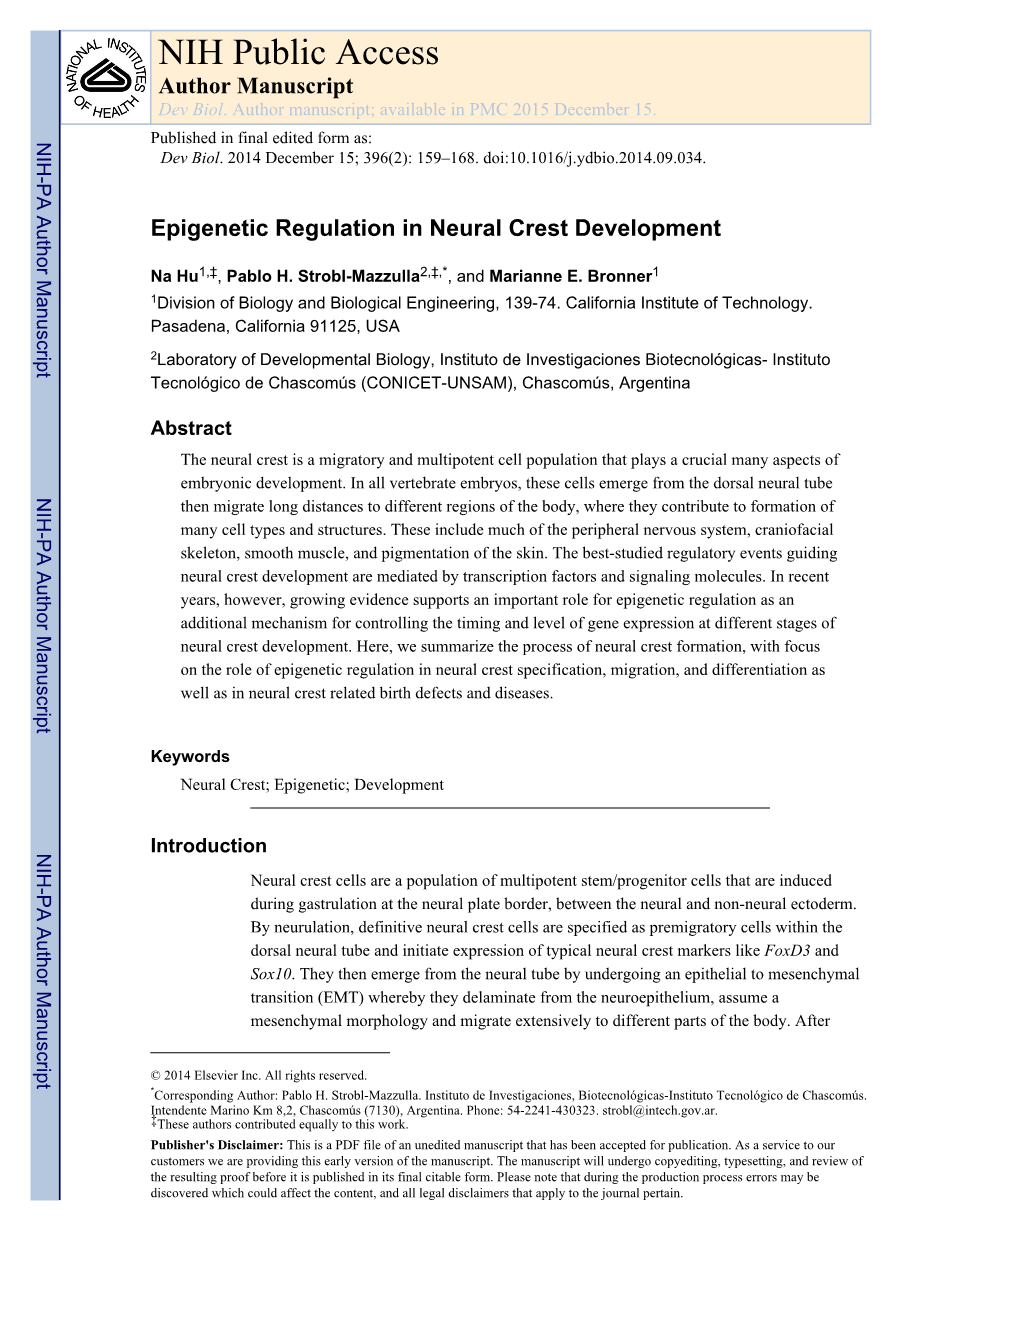 Epigenetic Regulation in Neural Crest Development